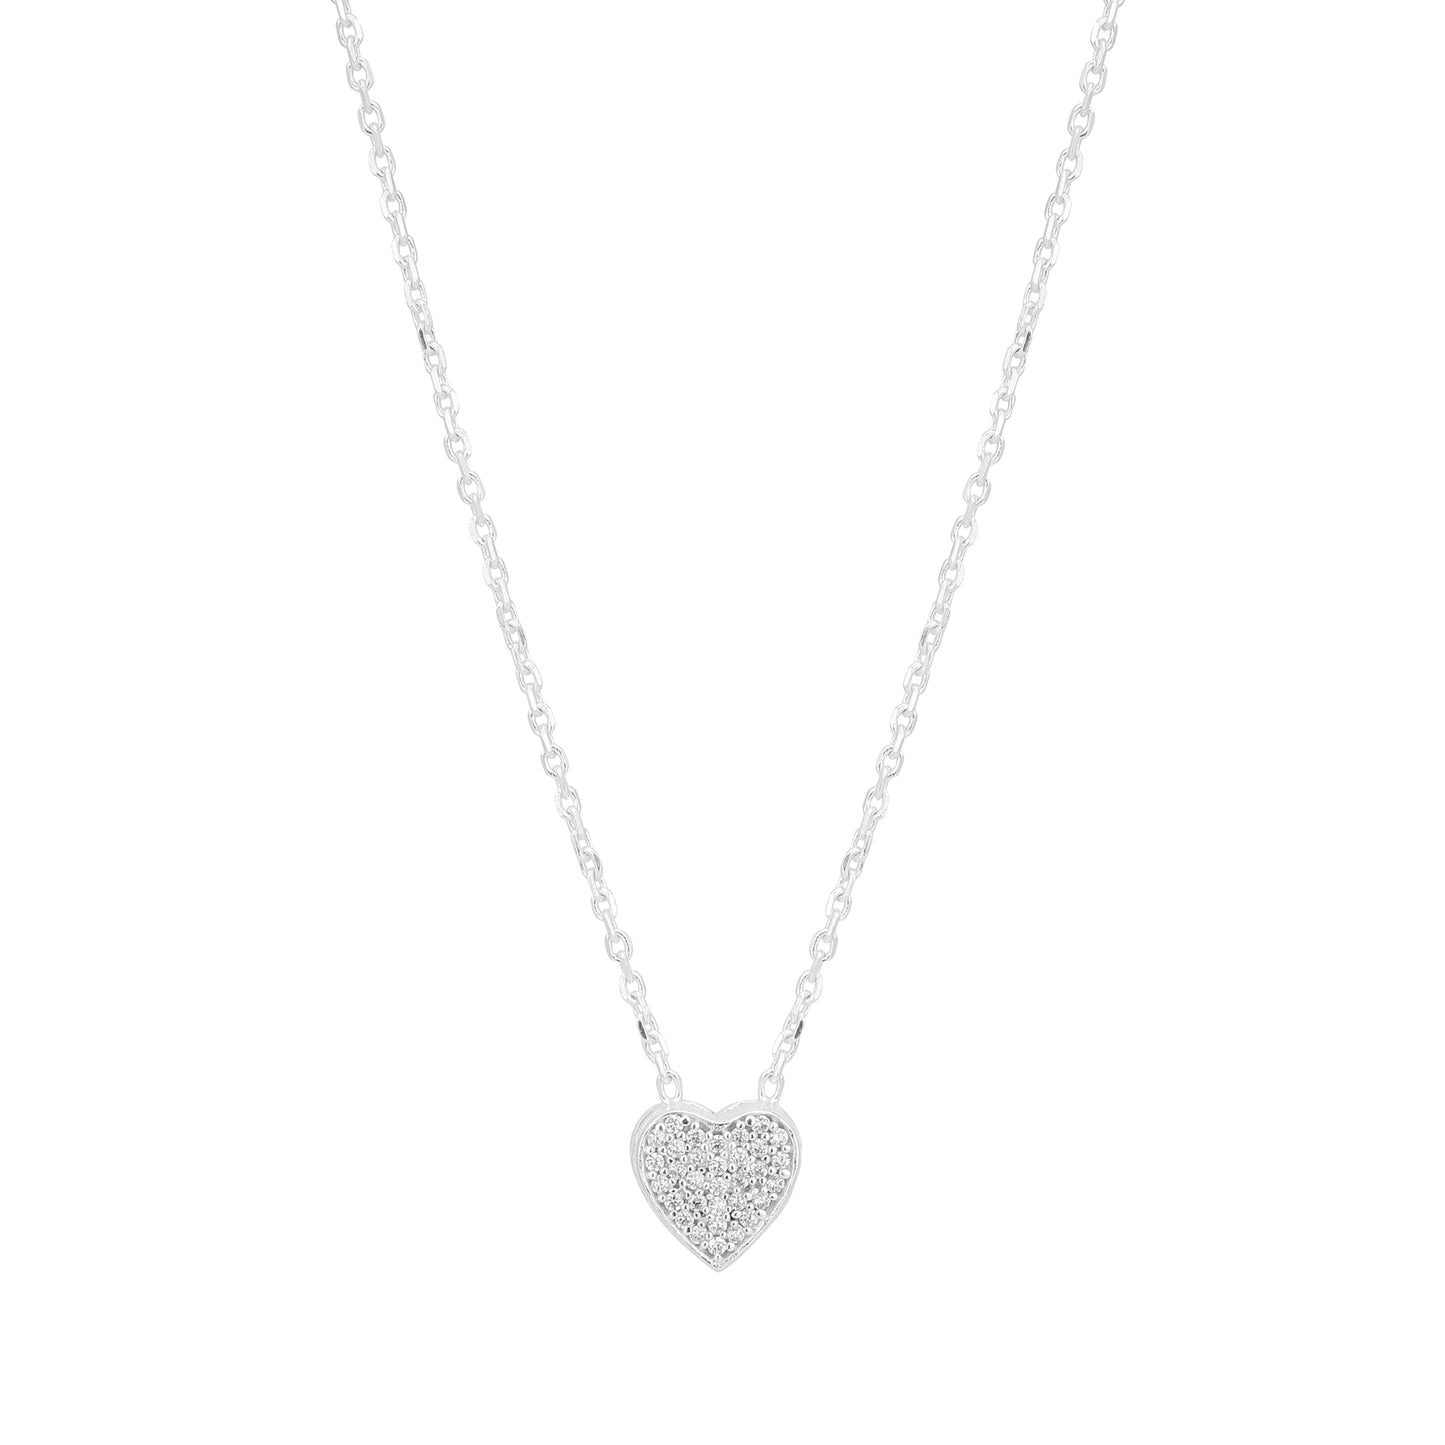 Carlton London Silver Heart Shaped Pendant Charm Necklace